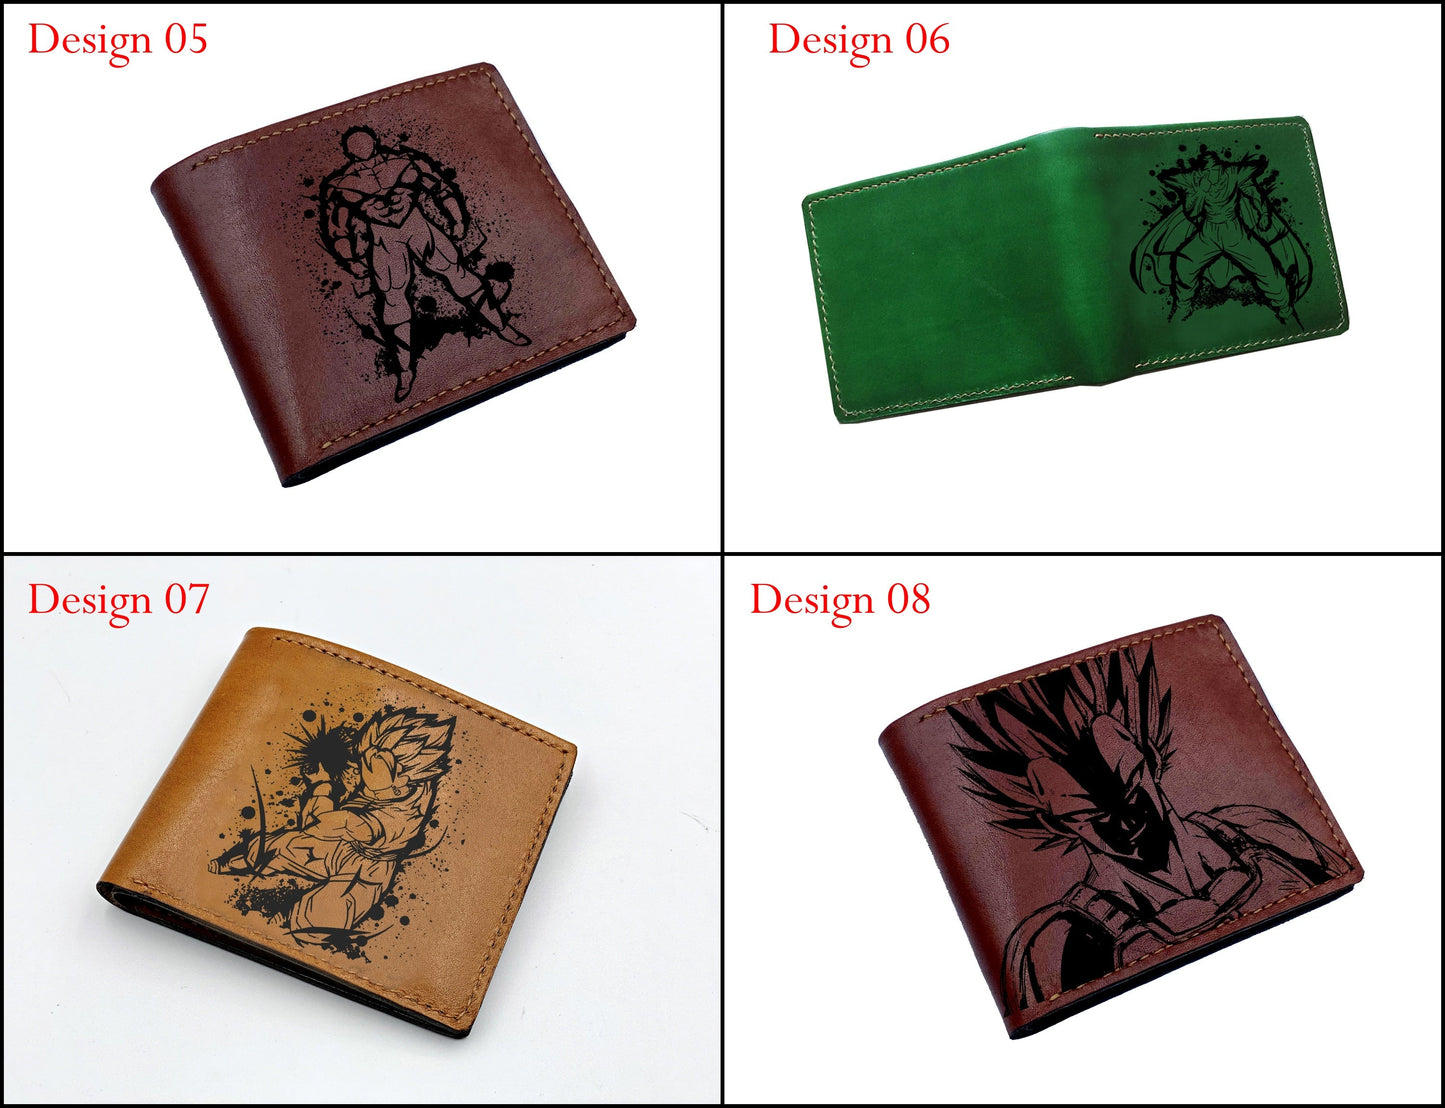 Mayan Corner - Majin Buu drawing wallet, dragon ball villain characters gift, gift for dragon ball fan, japan anime leather gift ideas, gift for boy